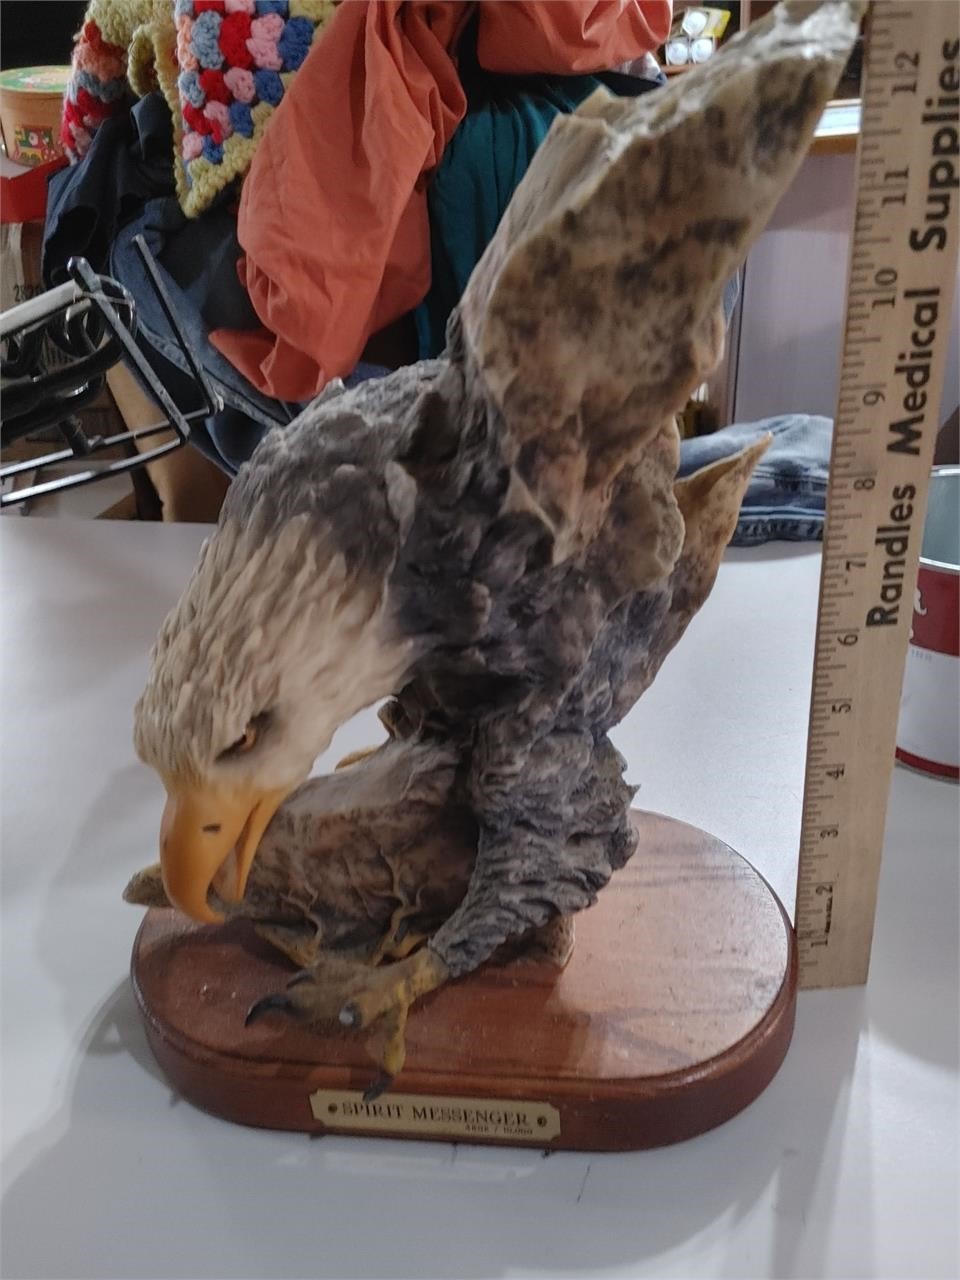 Spirit Messenger American Bald Eagle Figurine